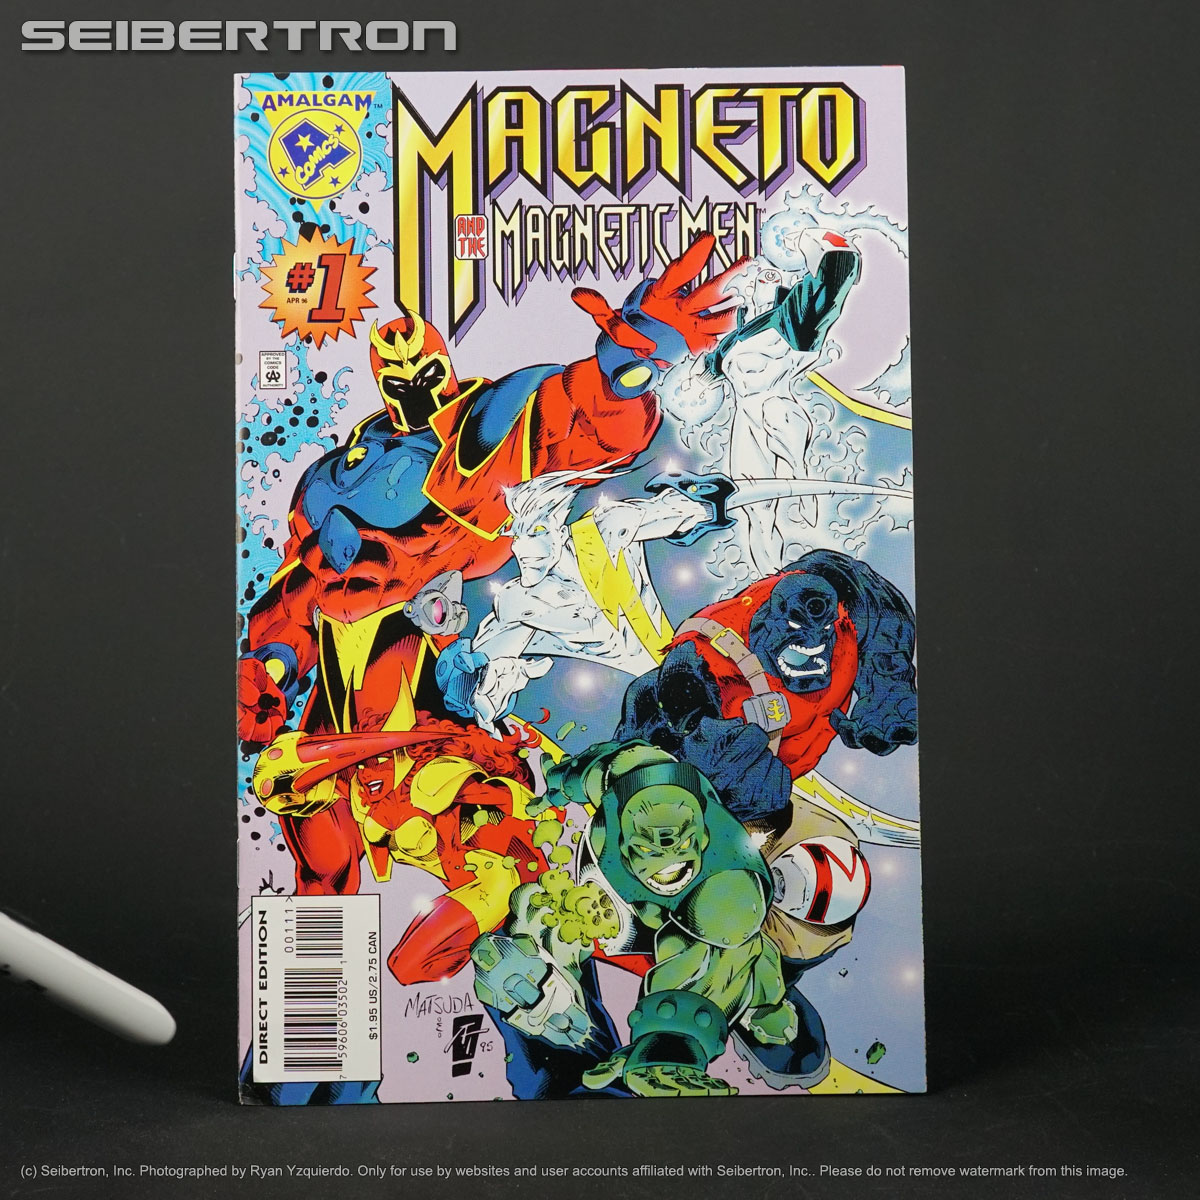 Magneto Magnetic Men 1 Dc Vs Marvel Amalgam Comics 1996 0129a Ebay